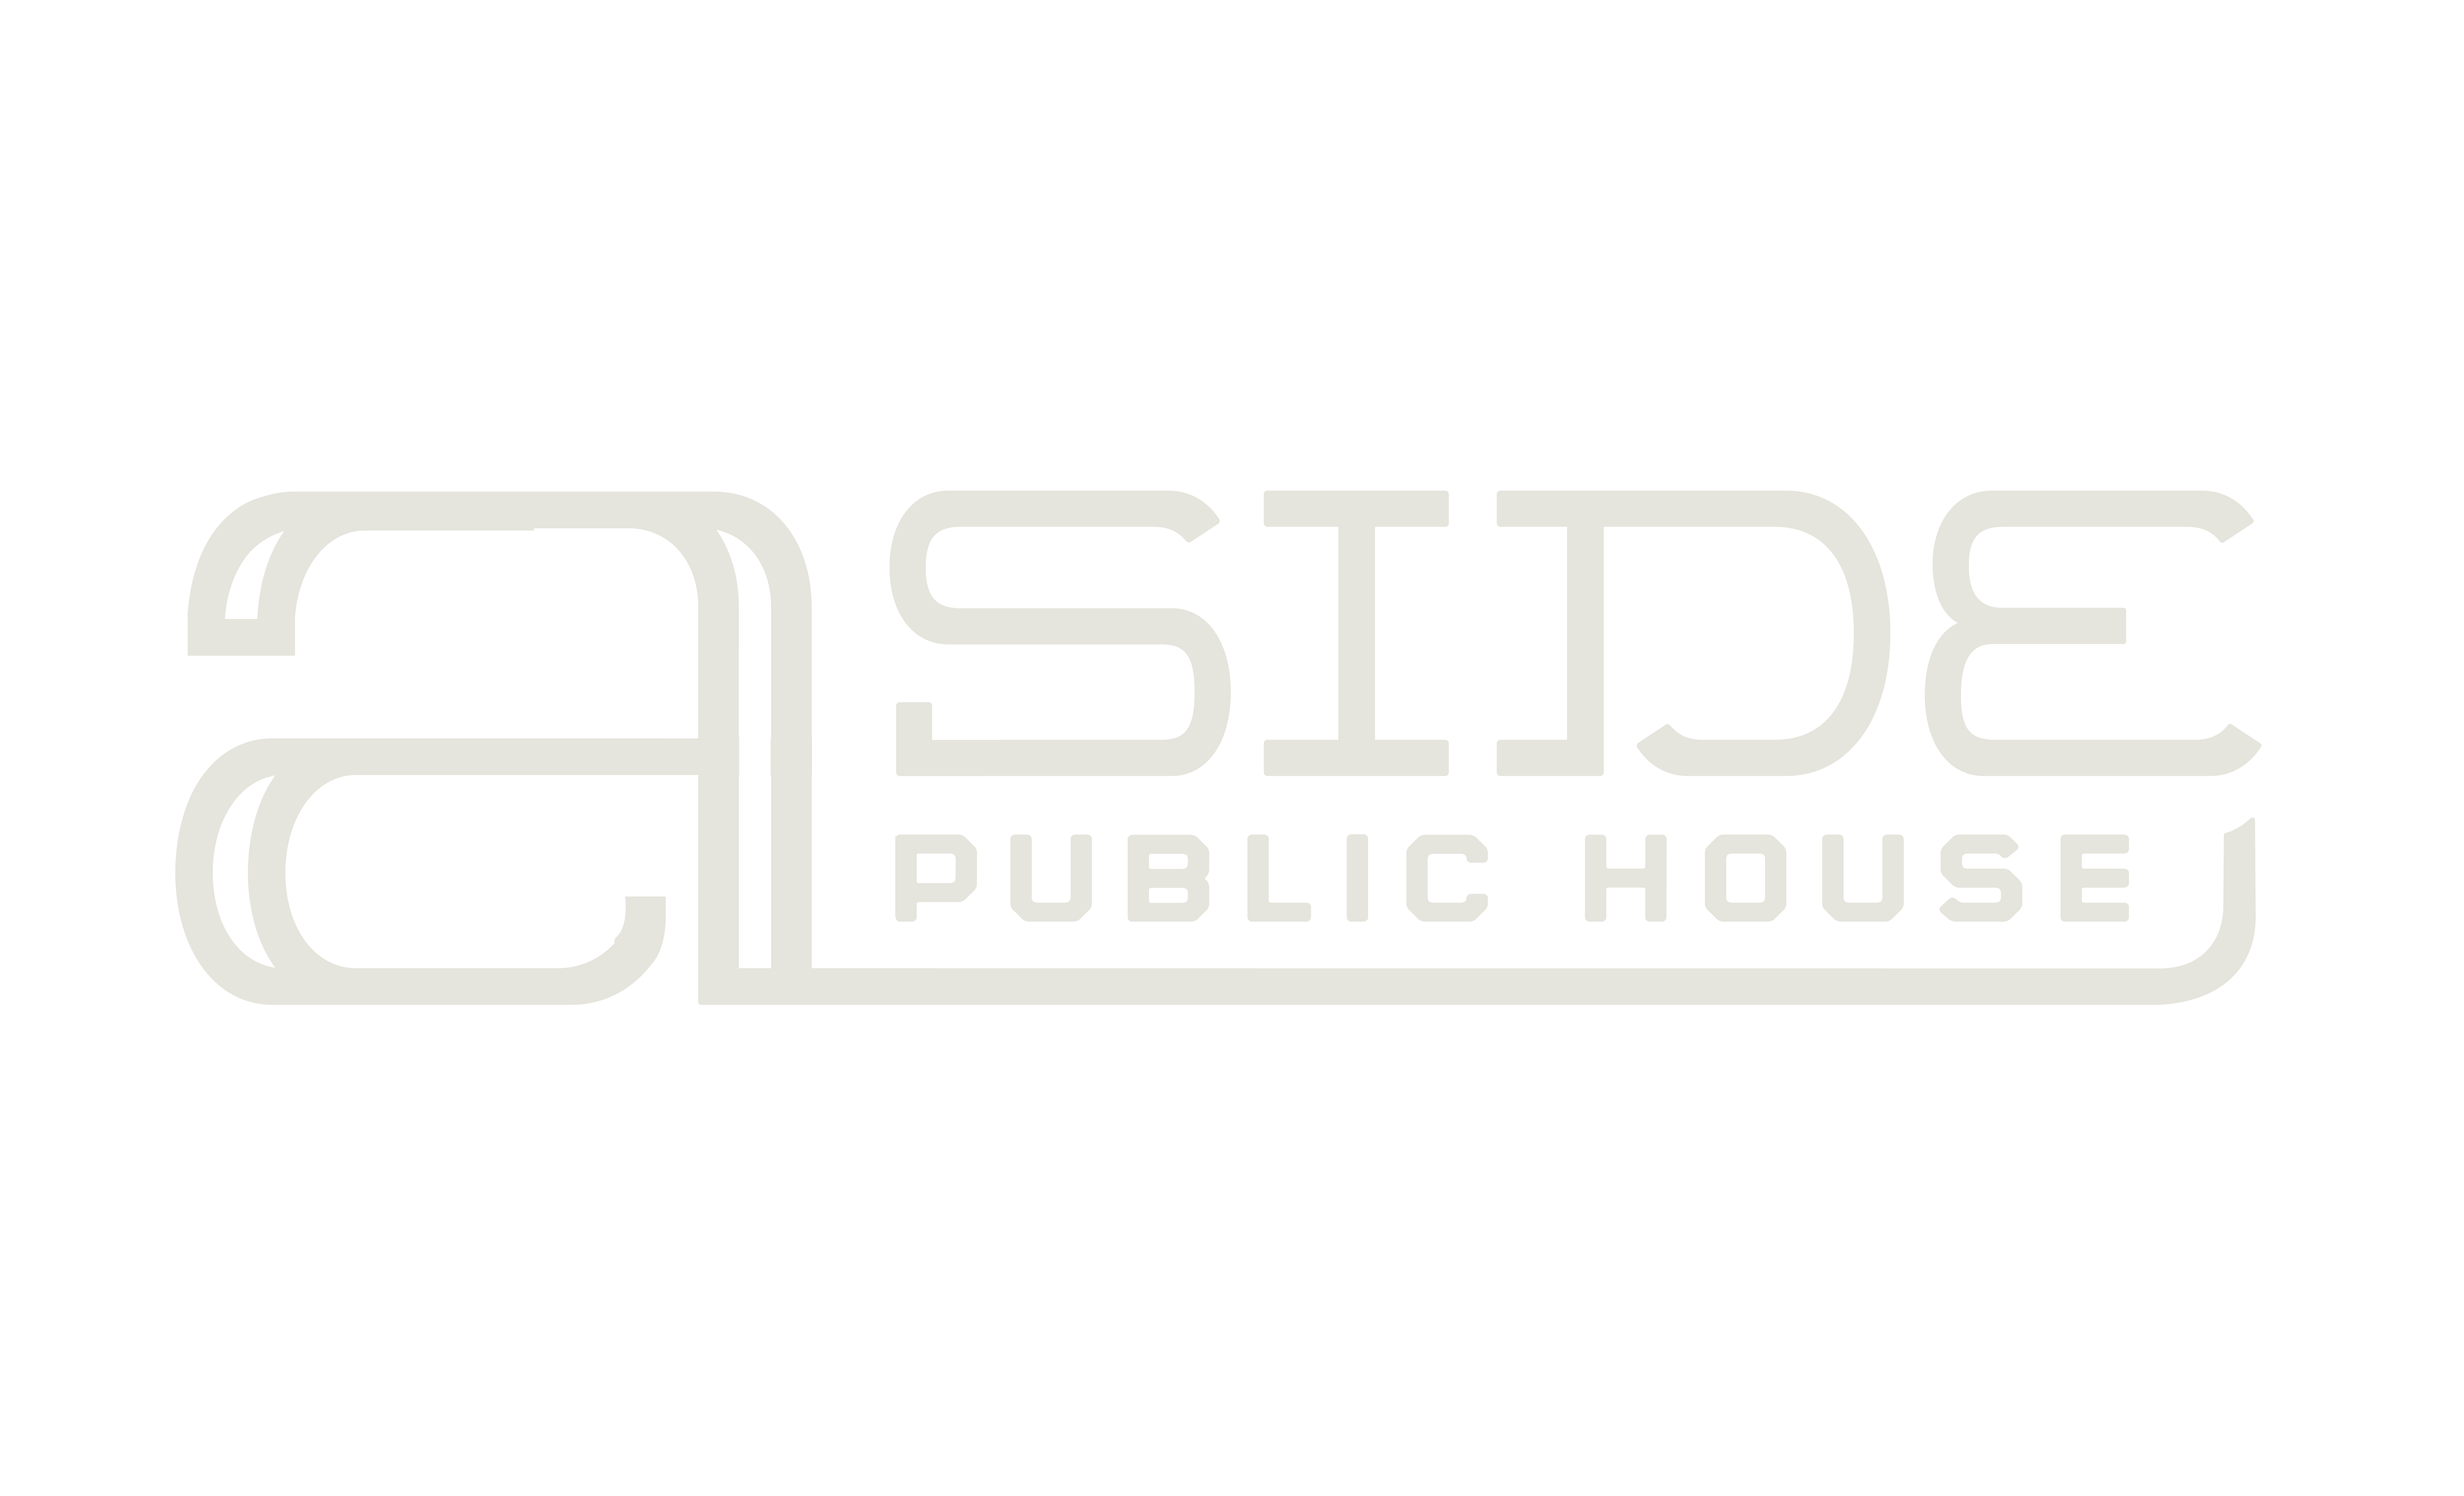 A-Side Public House